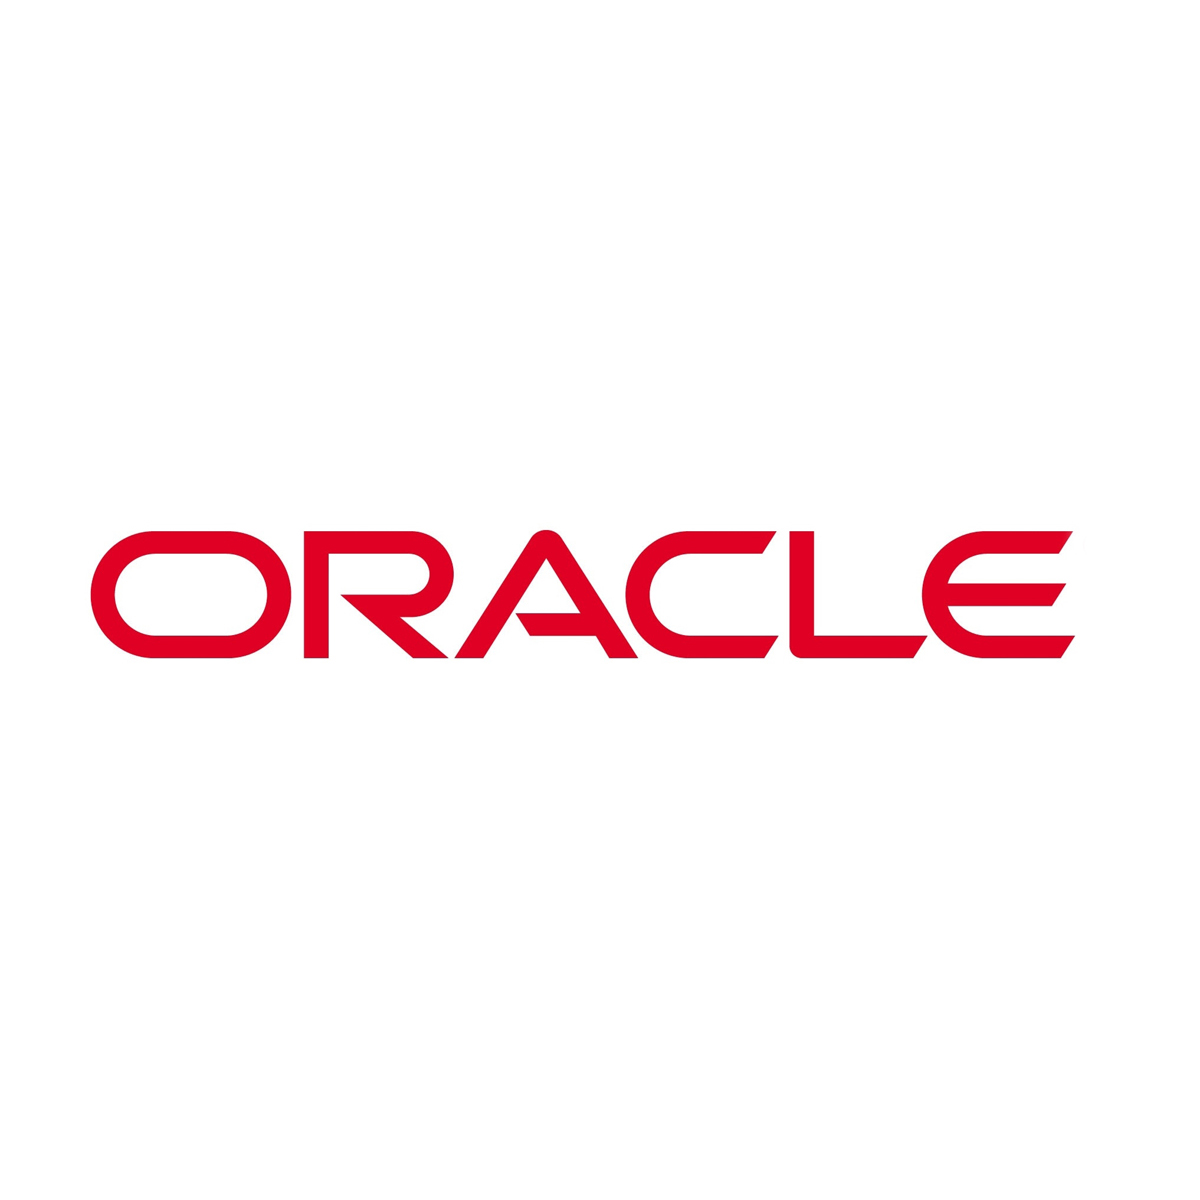  Best Enterprise CRM Software Logo: Oracle